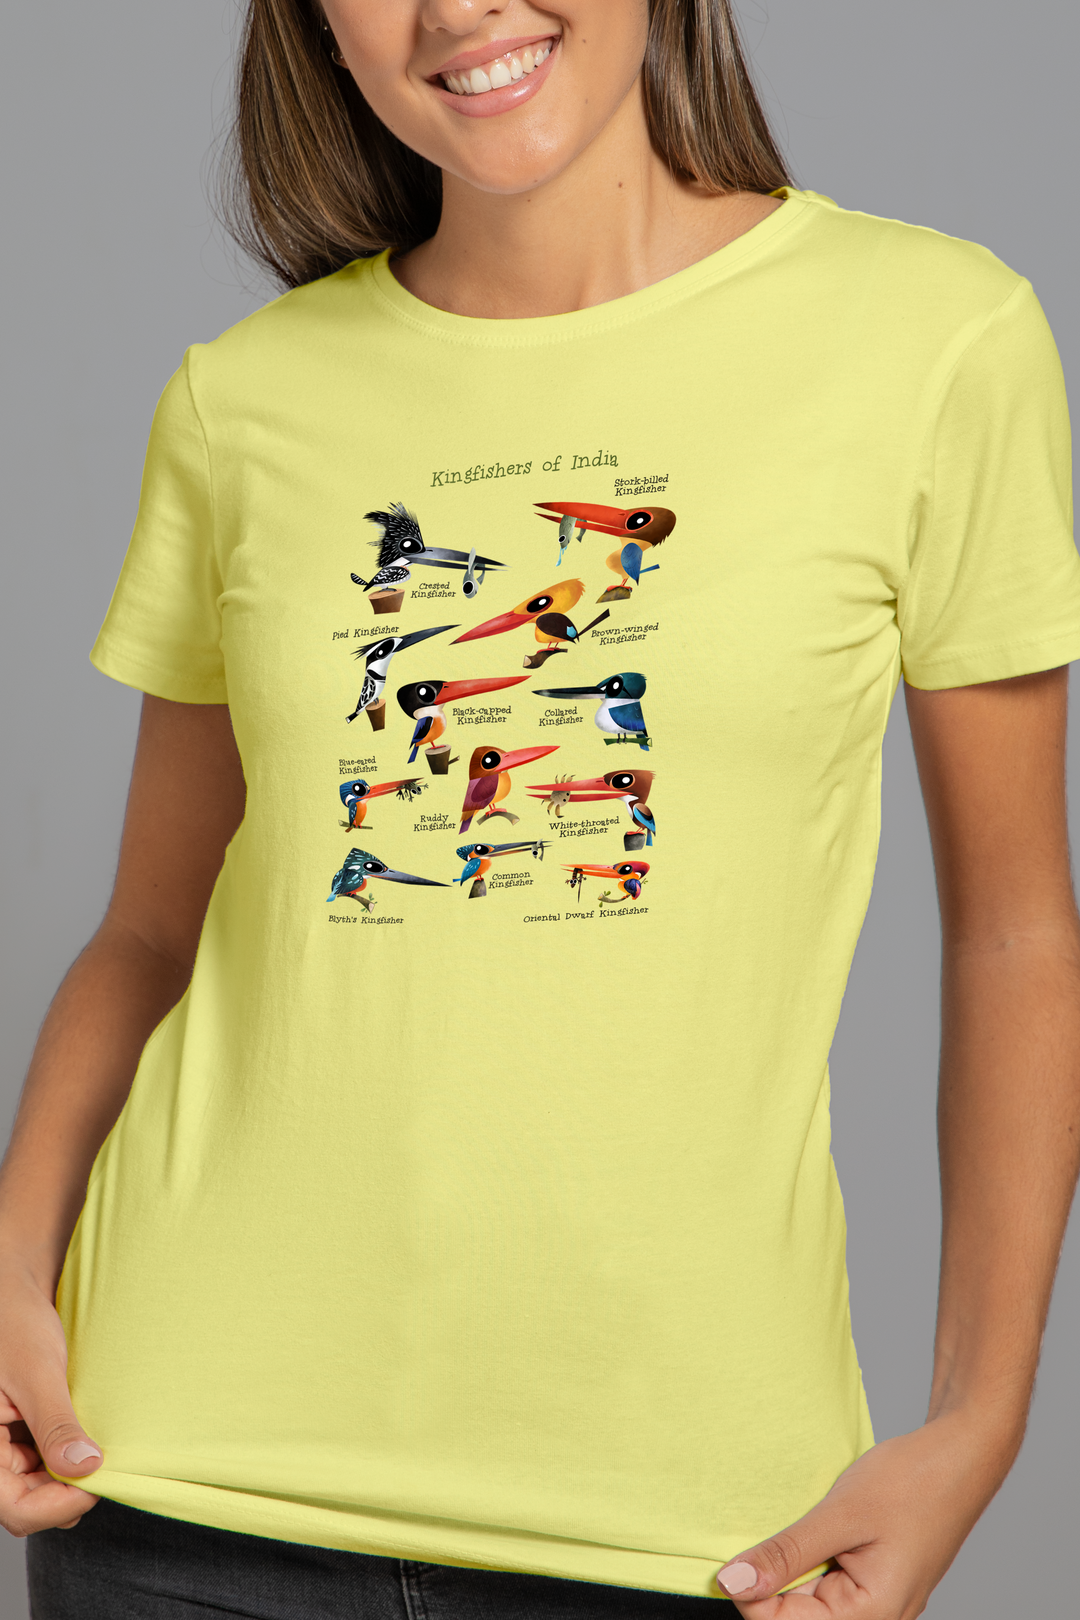 Kingfishers of India T-shirt